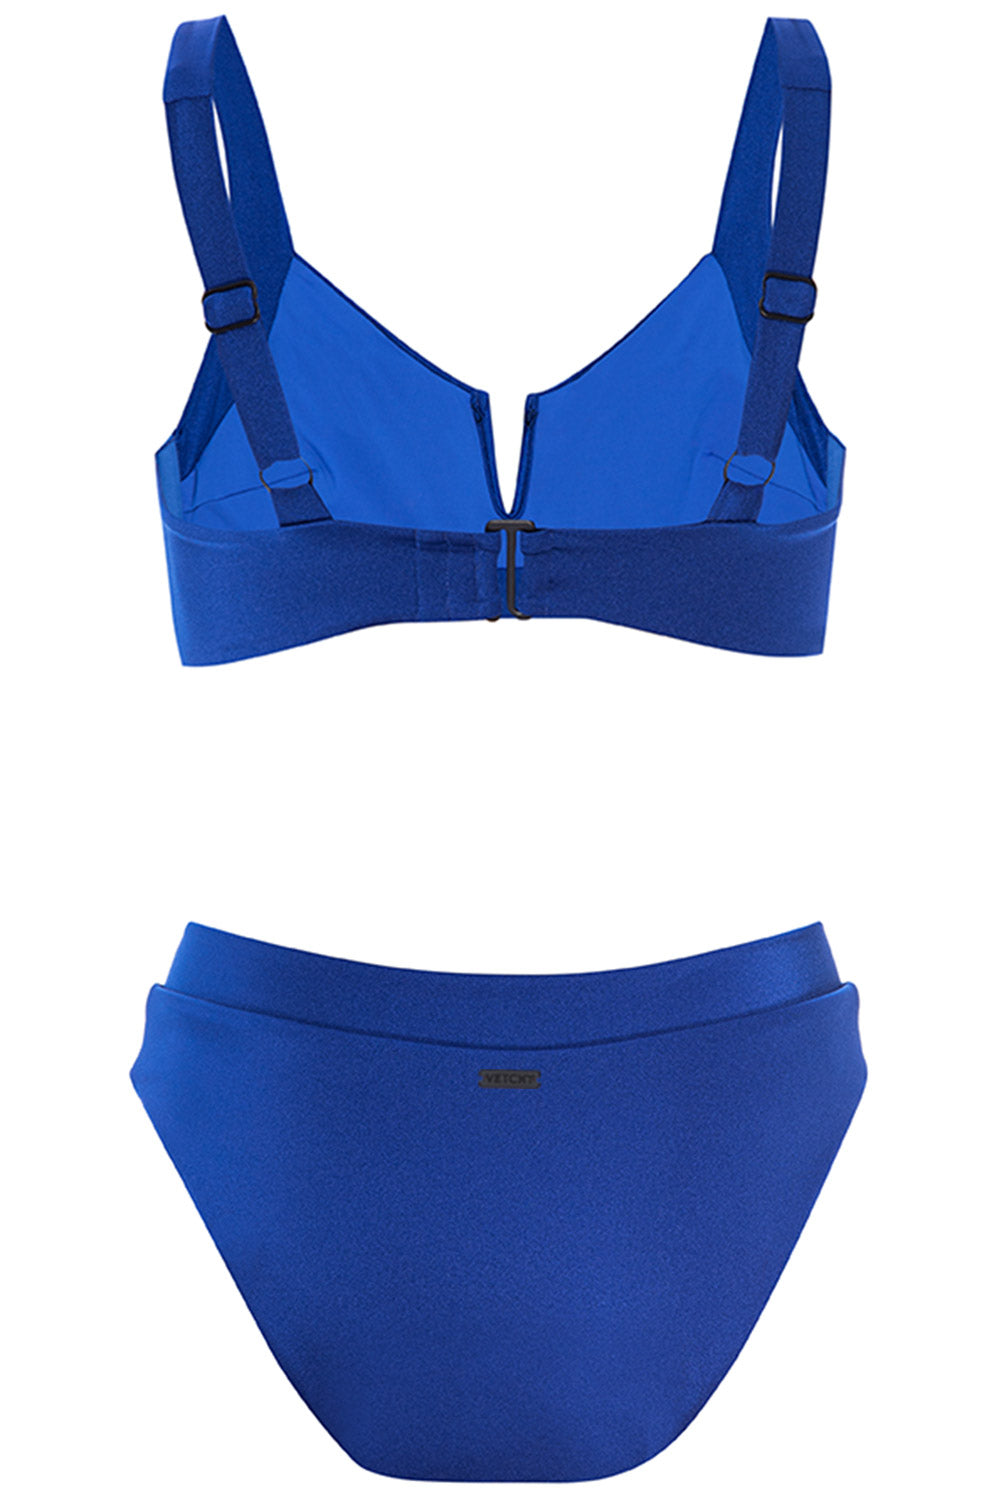 Back view of the Vista bikini shiny blue set on the white background